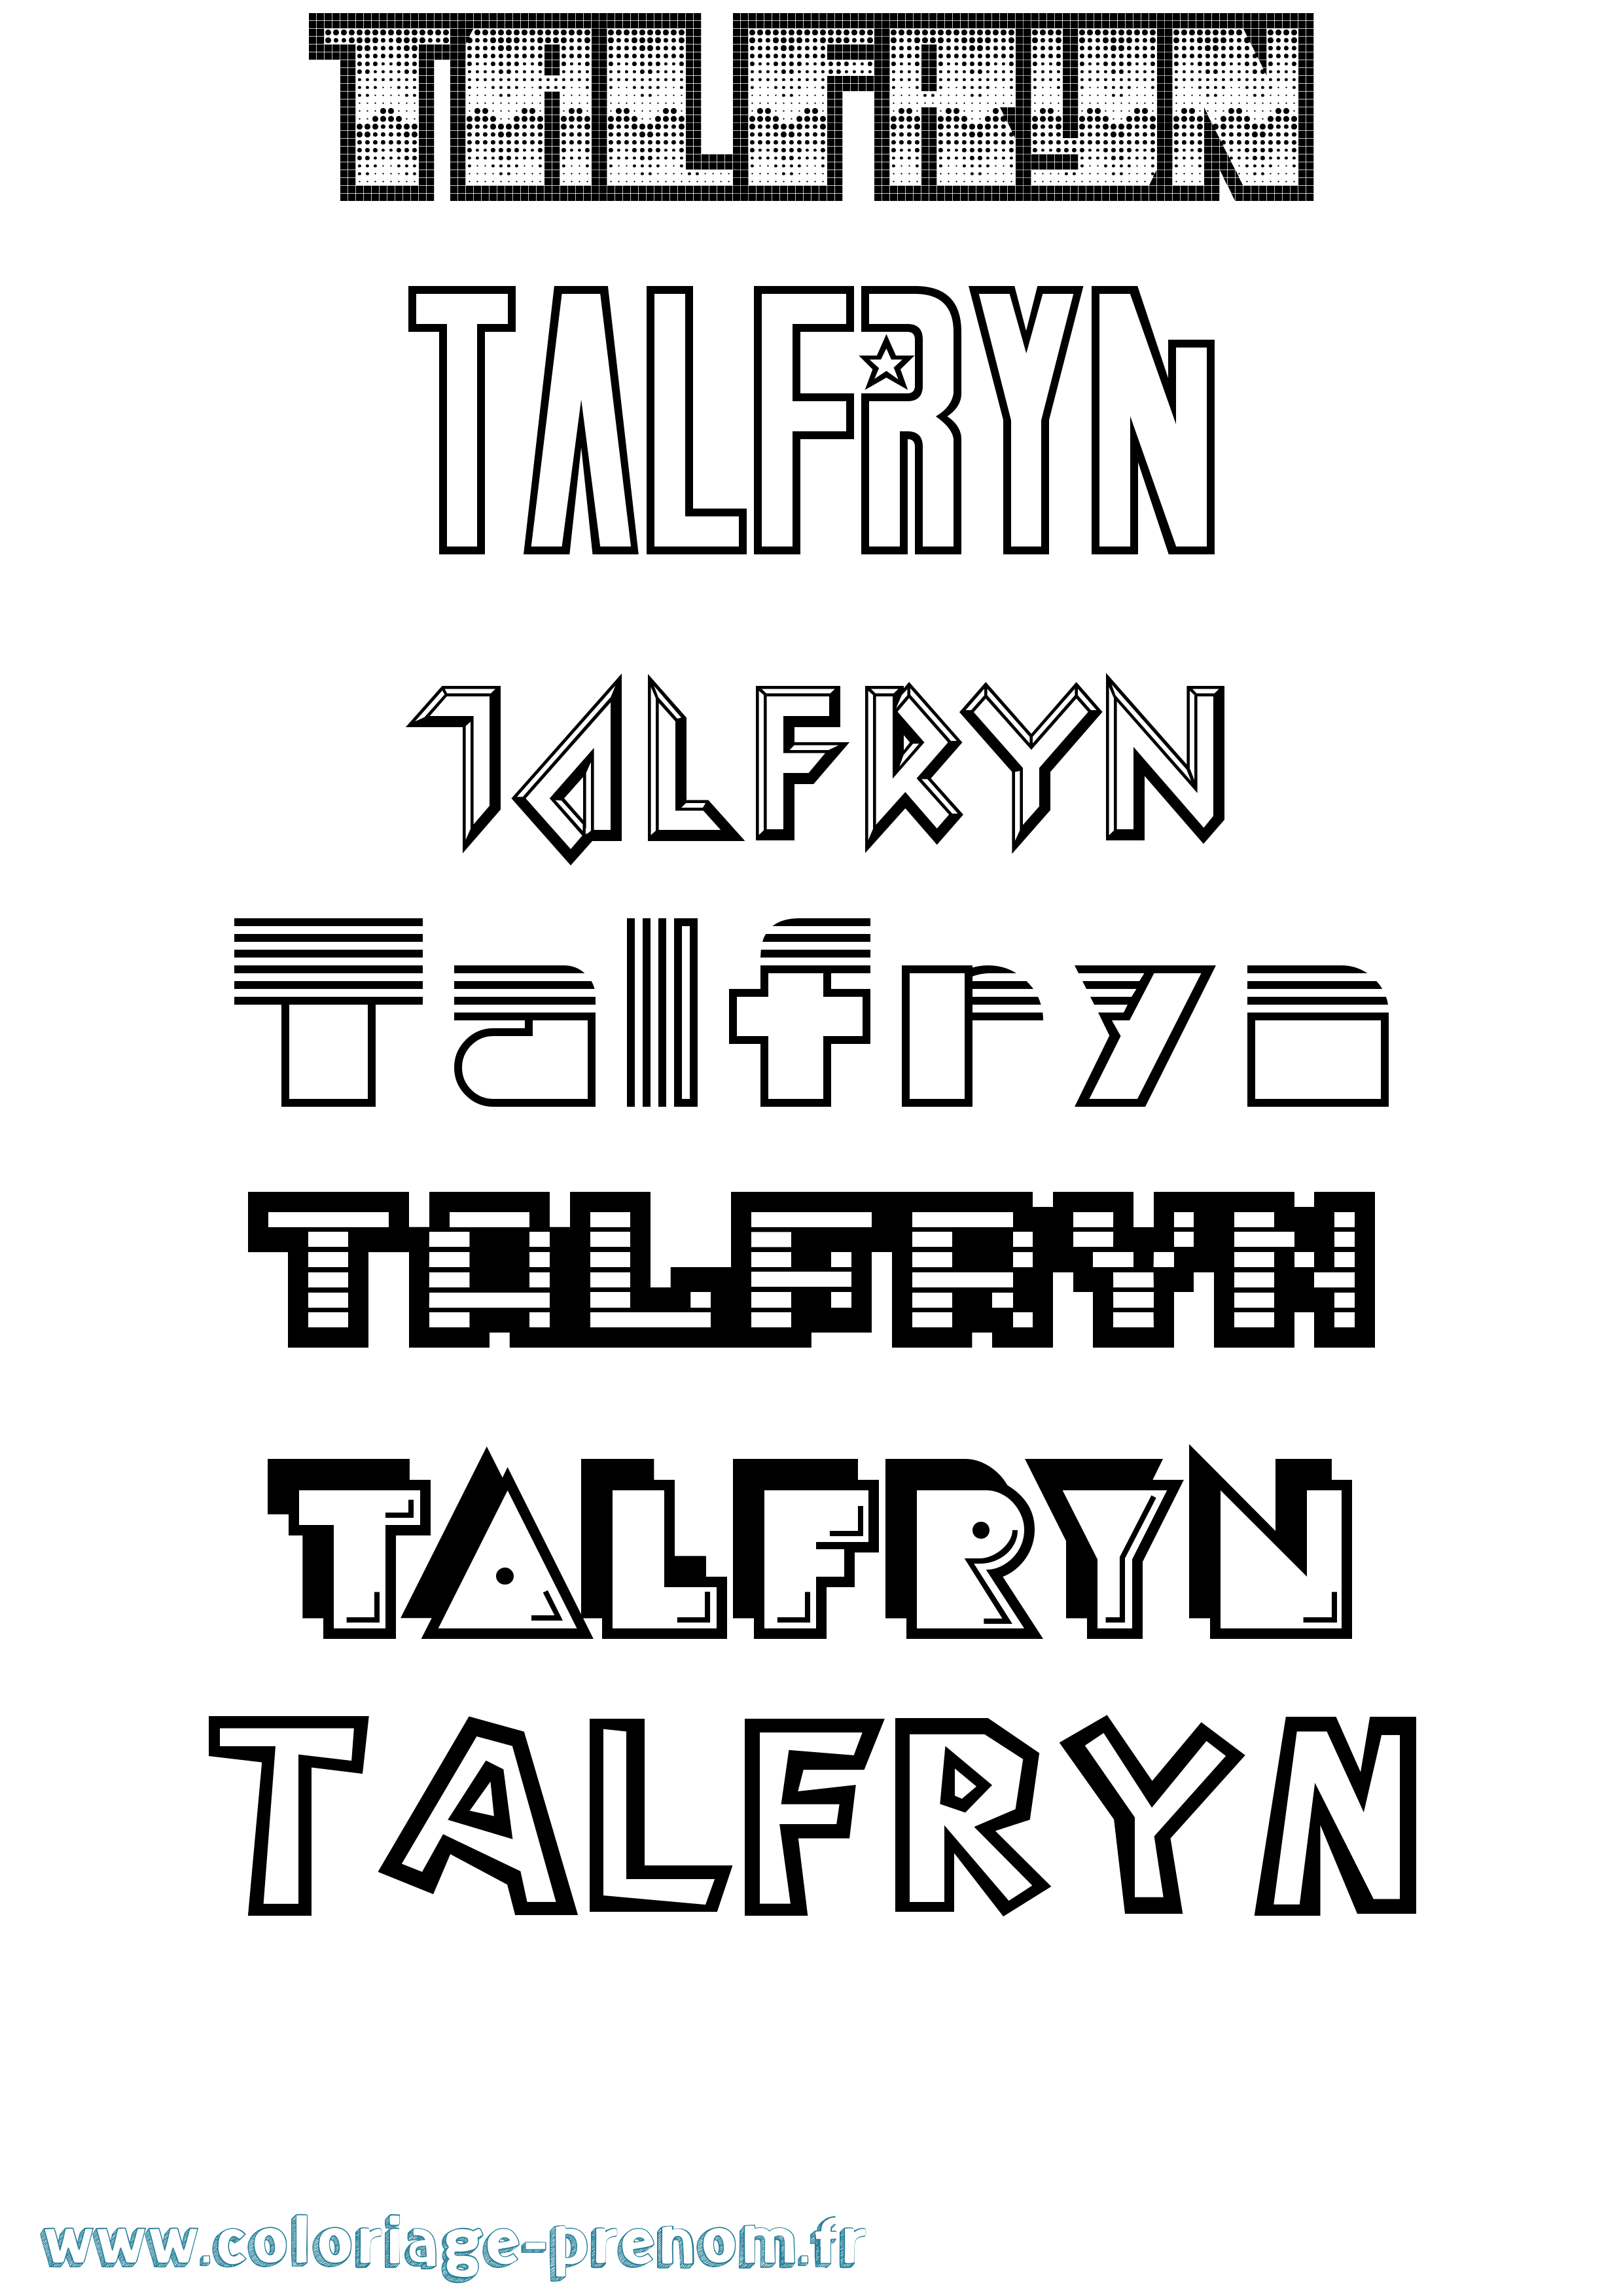 Coloriage prénom Talfryn Jeux Vidéos